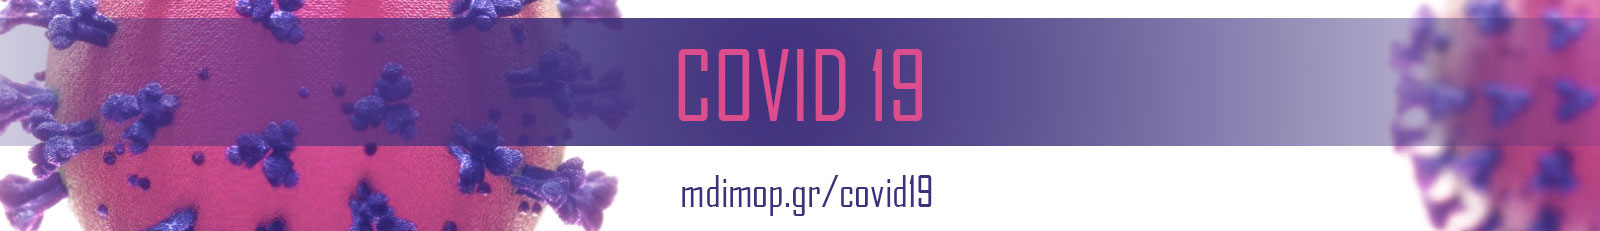 covid19-banner